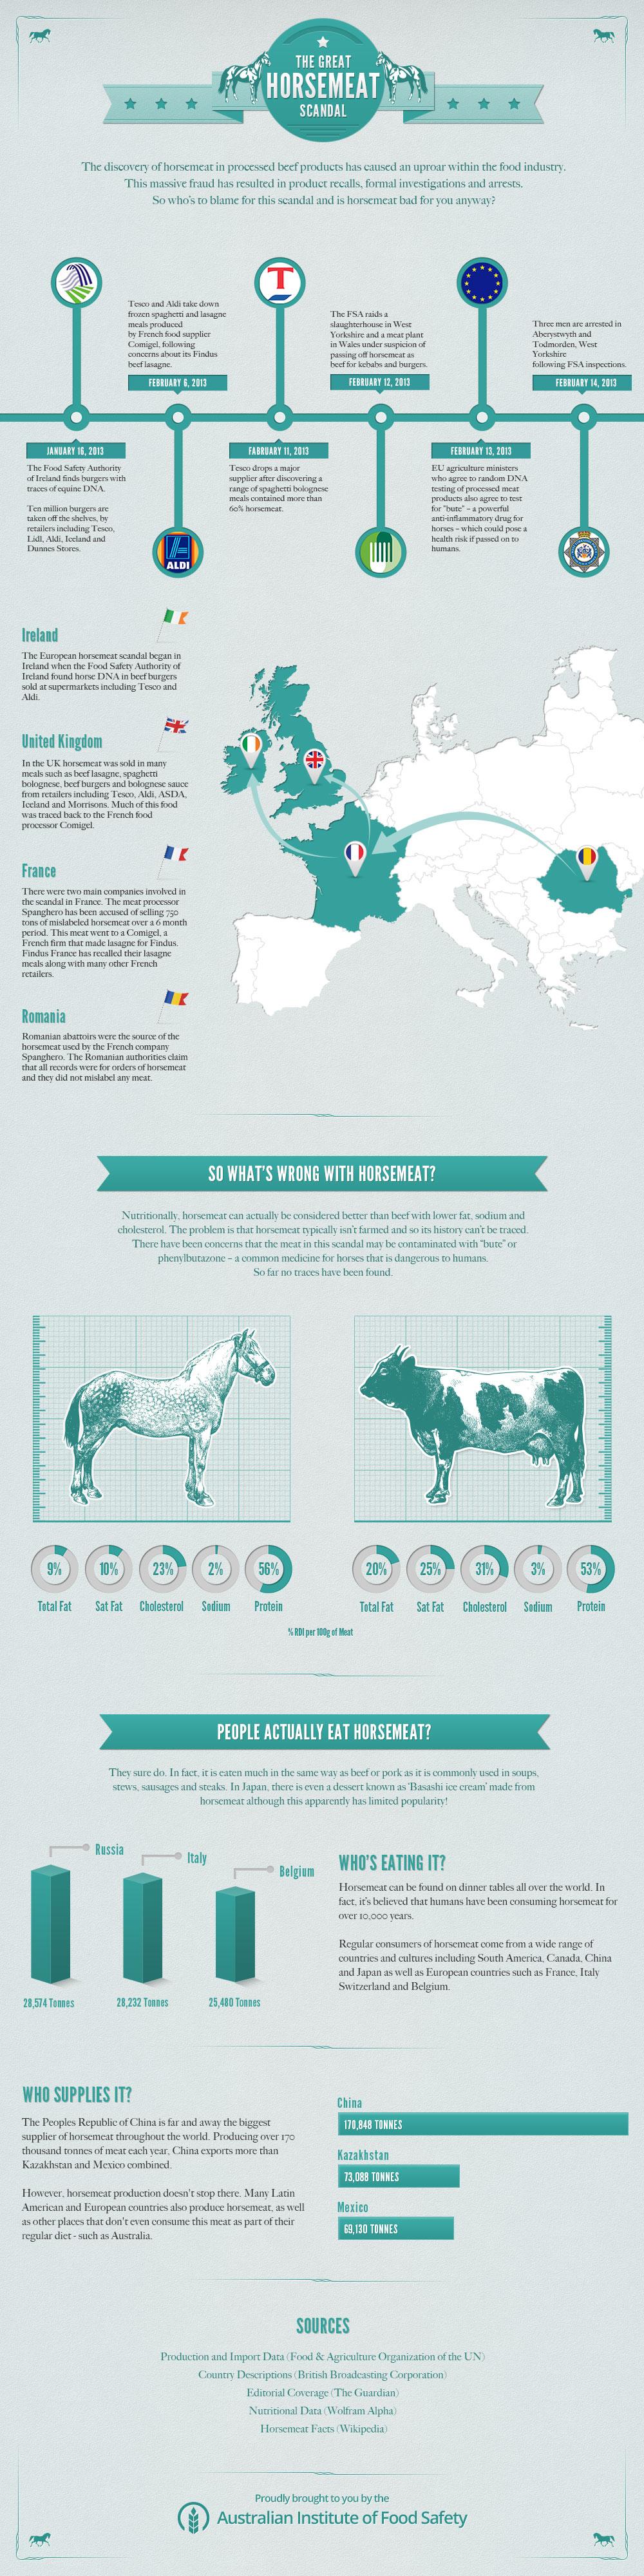 Horsemeat Scandal [Infographic]